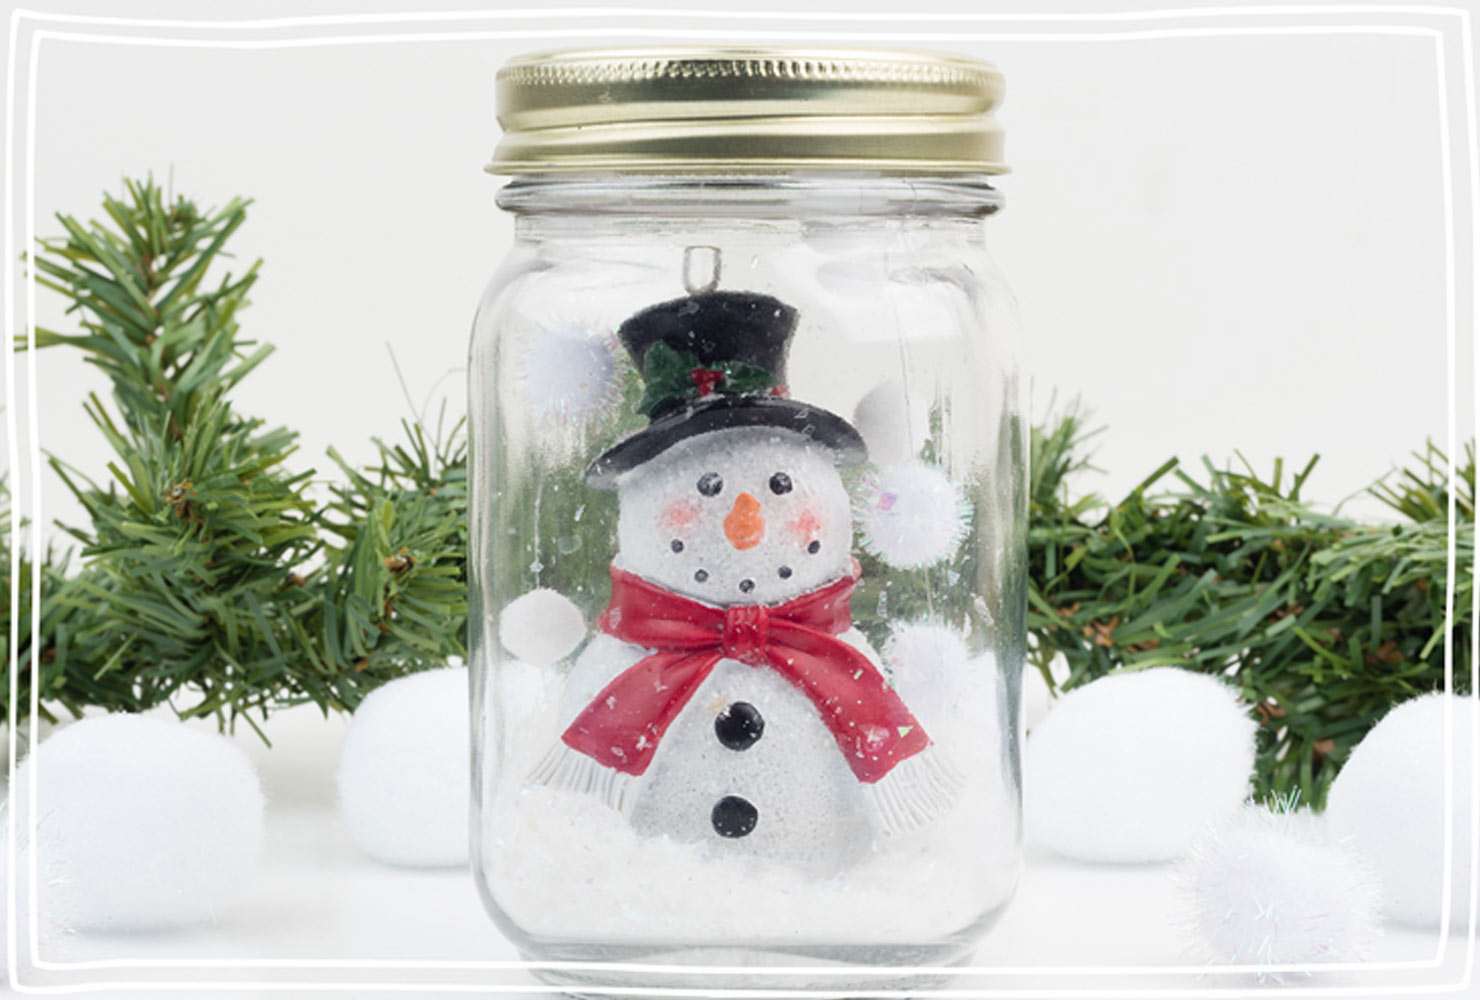 Mason jar snow globe with snowman.